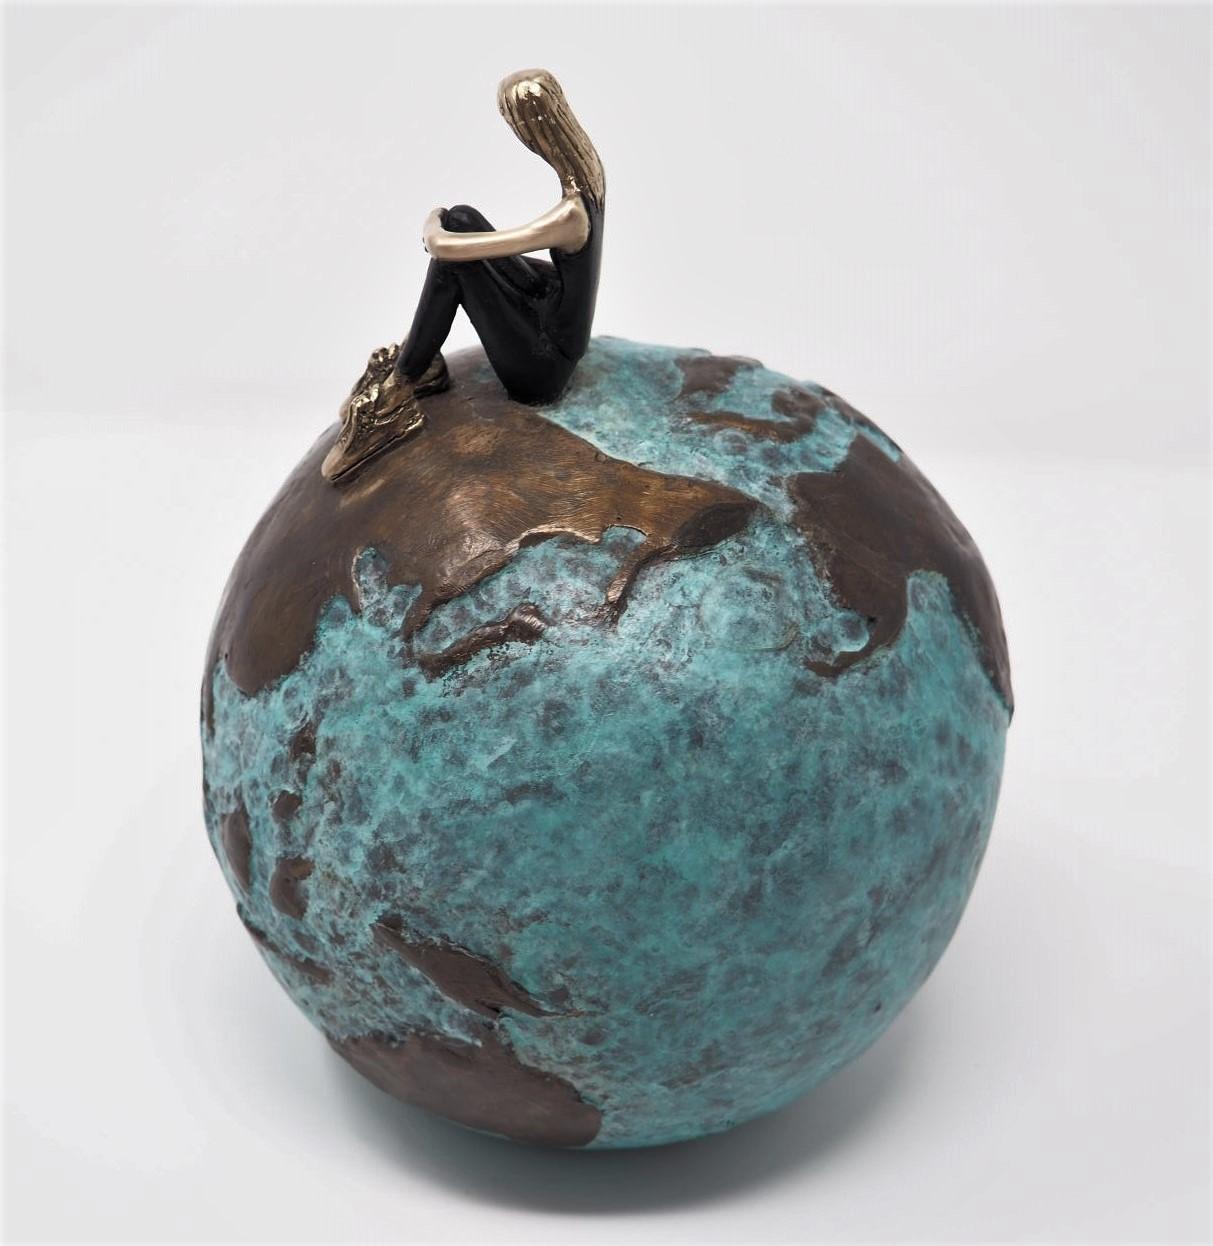 Mireia Serra Figurative Sculpture - "Inner World" contemporary small figurative bronze table sculpture girl freedom